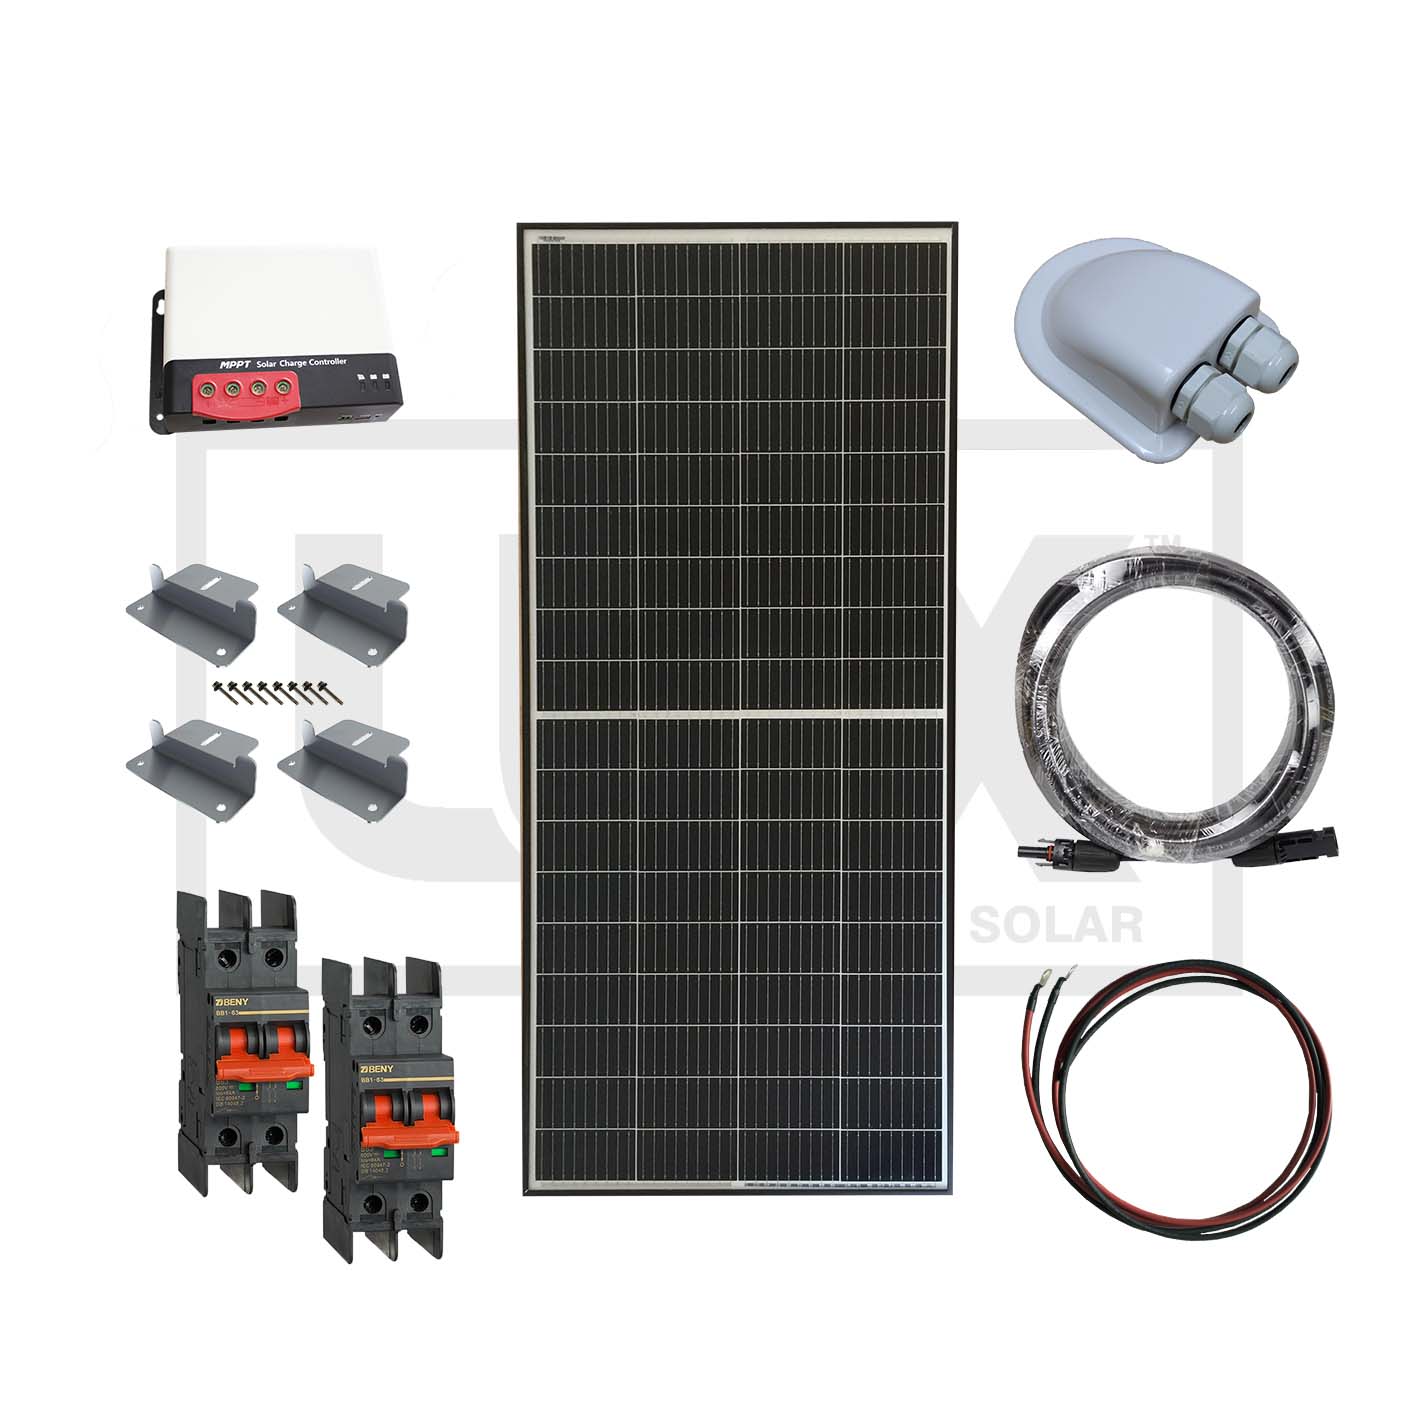 Motorhome, Boat, Campervan, Caravan Solar Kits  DIY Installable off-grid solar kits Upgradable to Victron  100 to 840 Watt